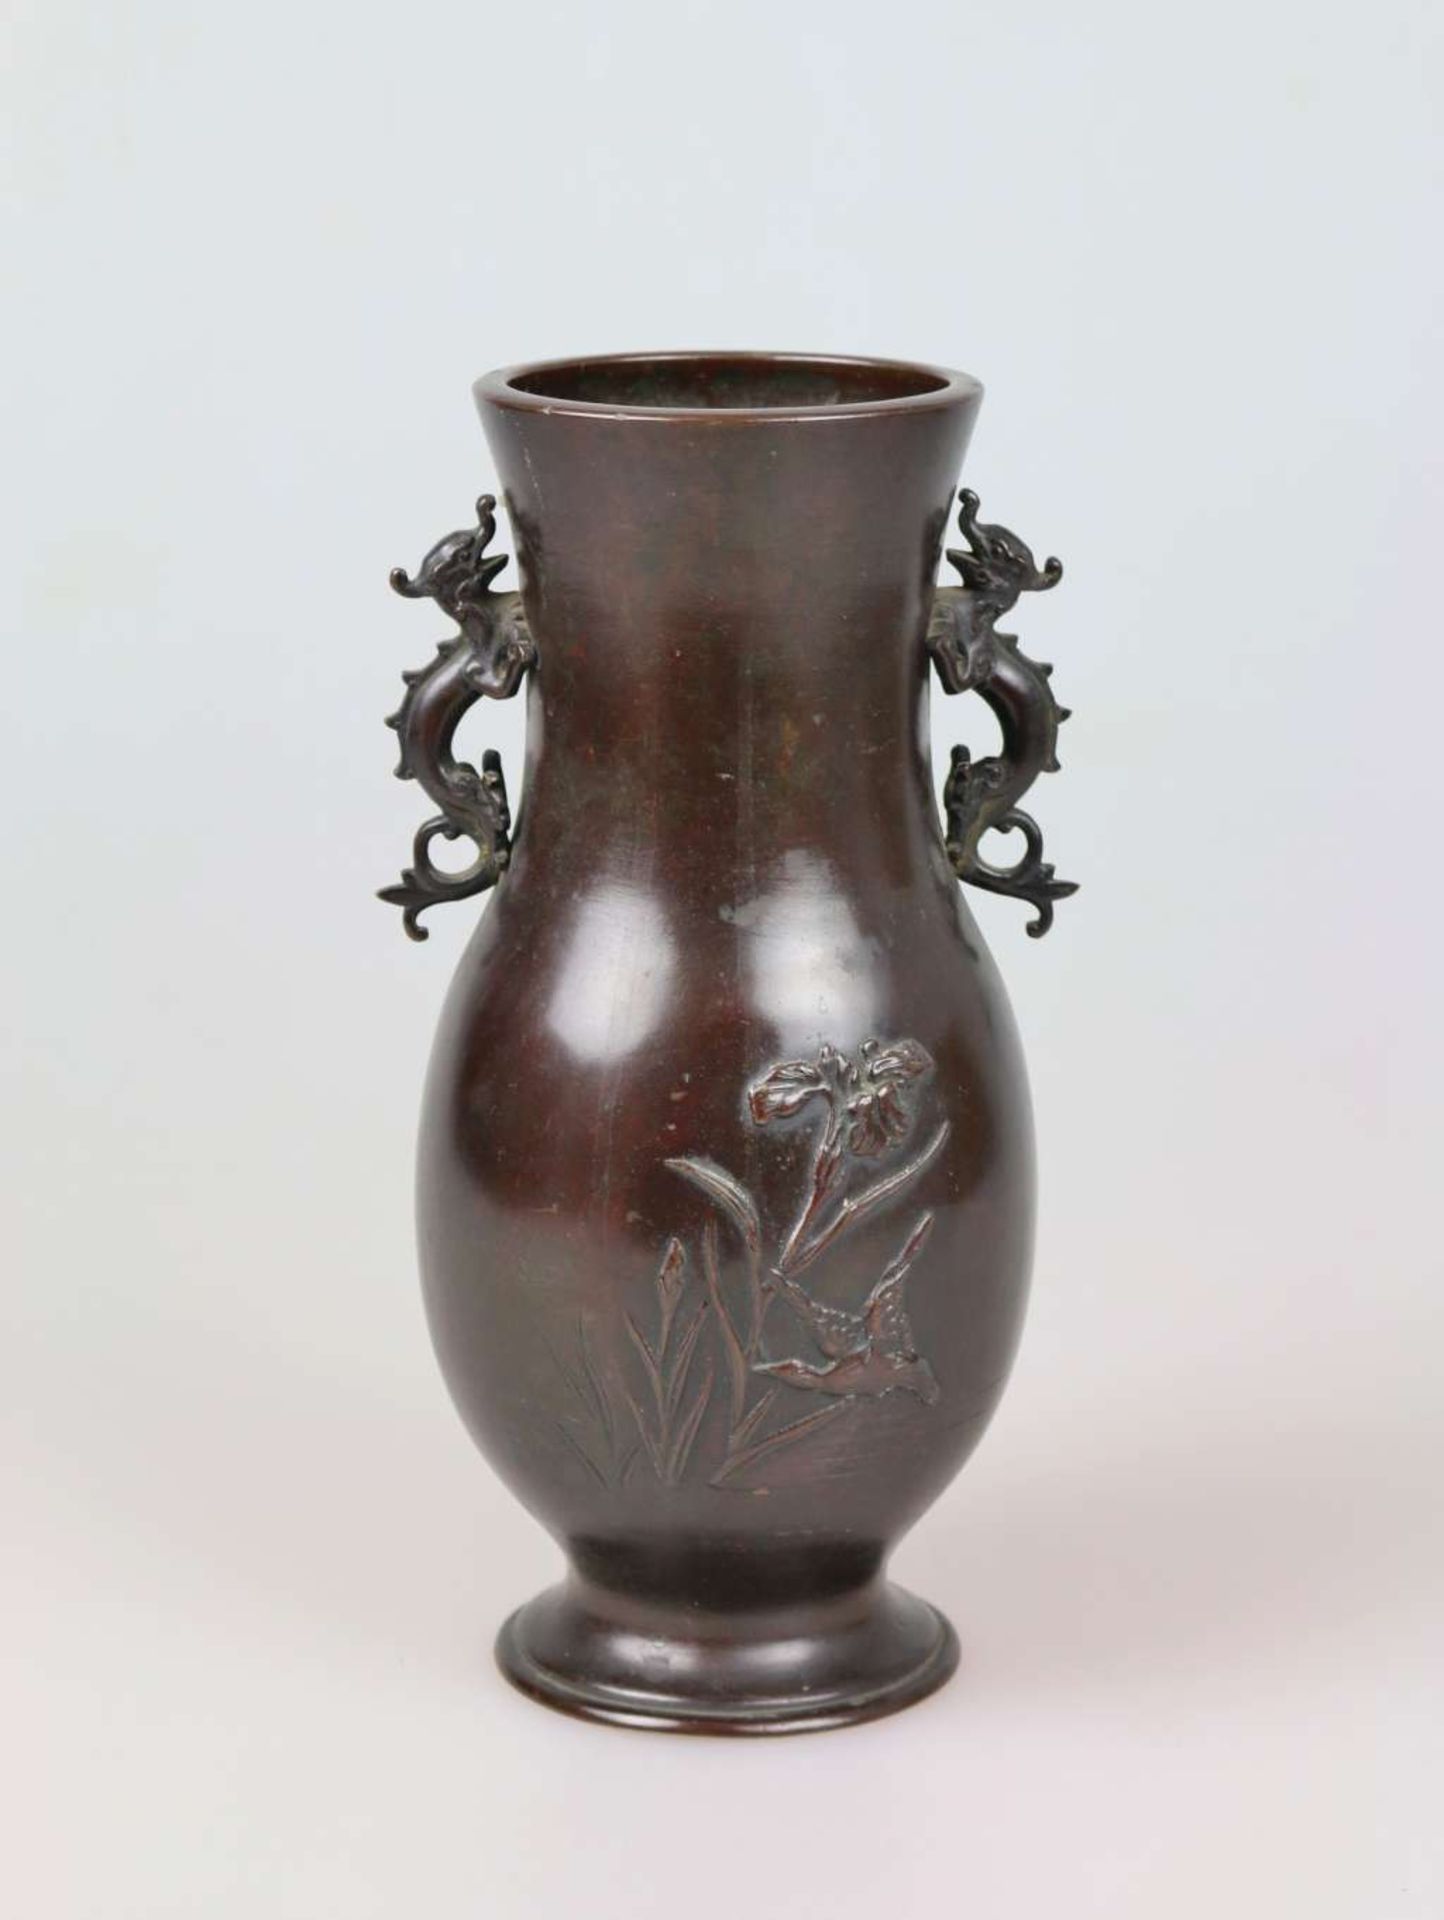 Vase, Japan, Bronze, dunkelbraun patieniert, 20. Jh. - Bild 3 aus 3